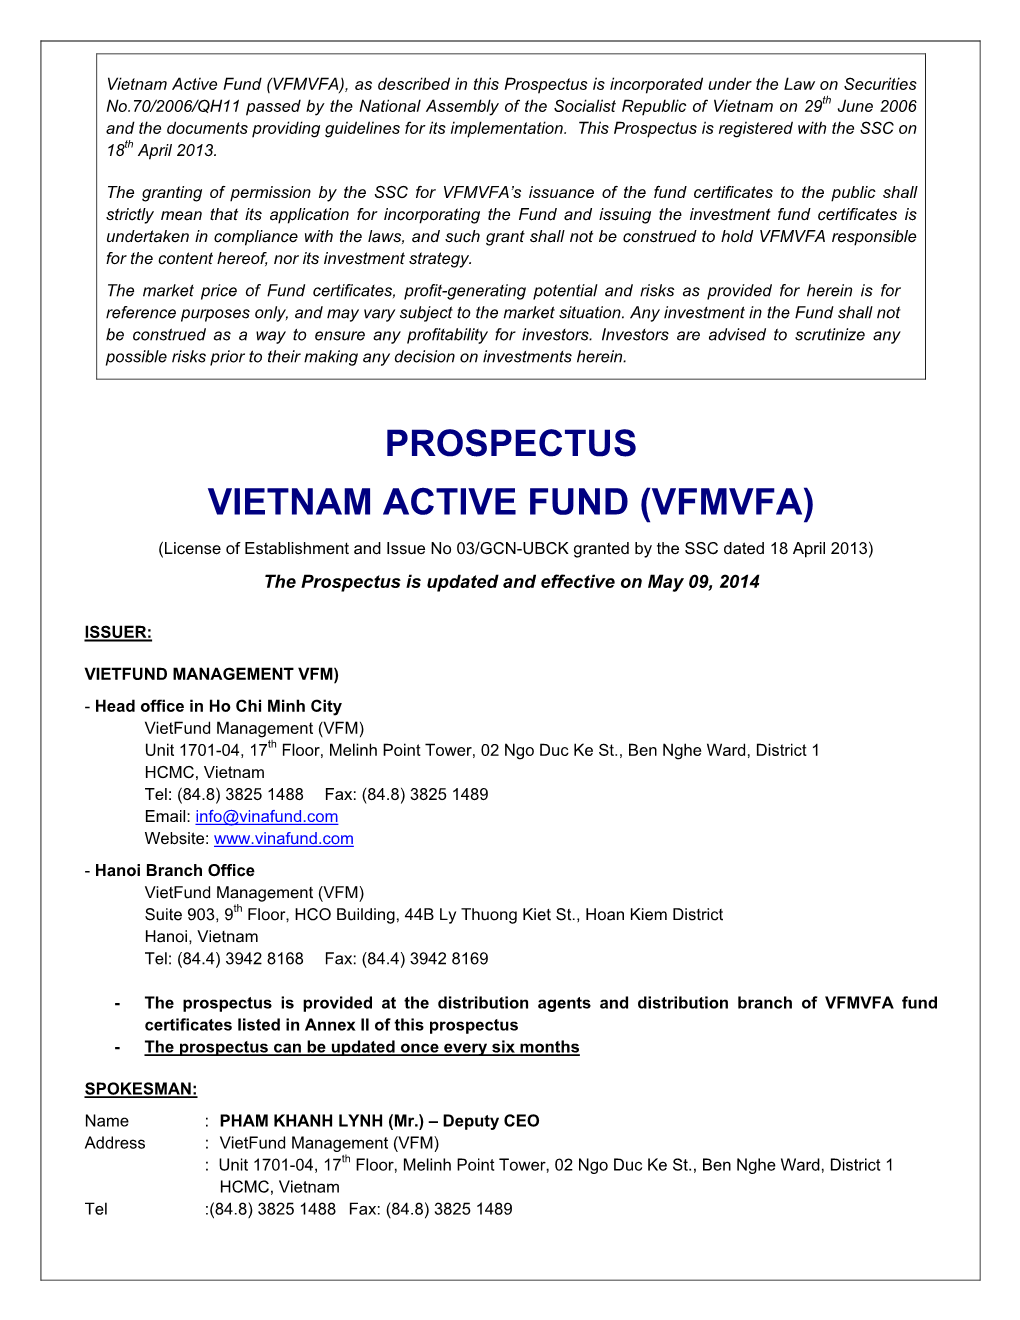 Prospectus Vietnam Active Fund (Vfmvfa)